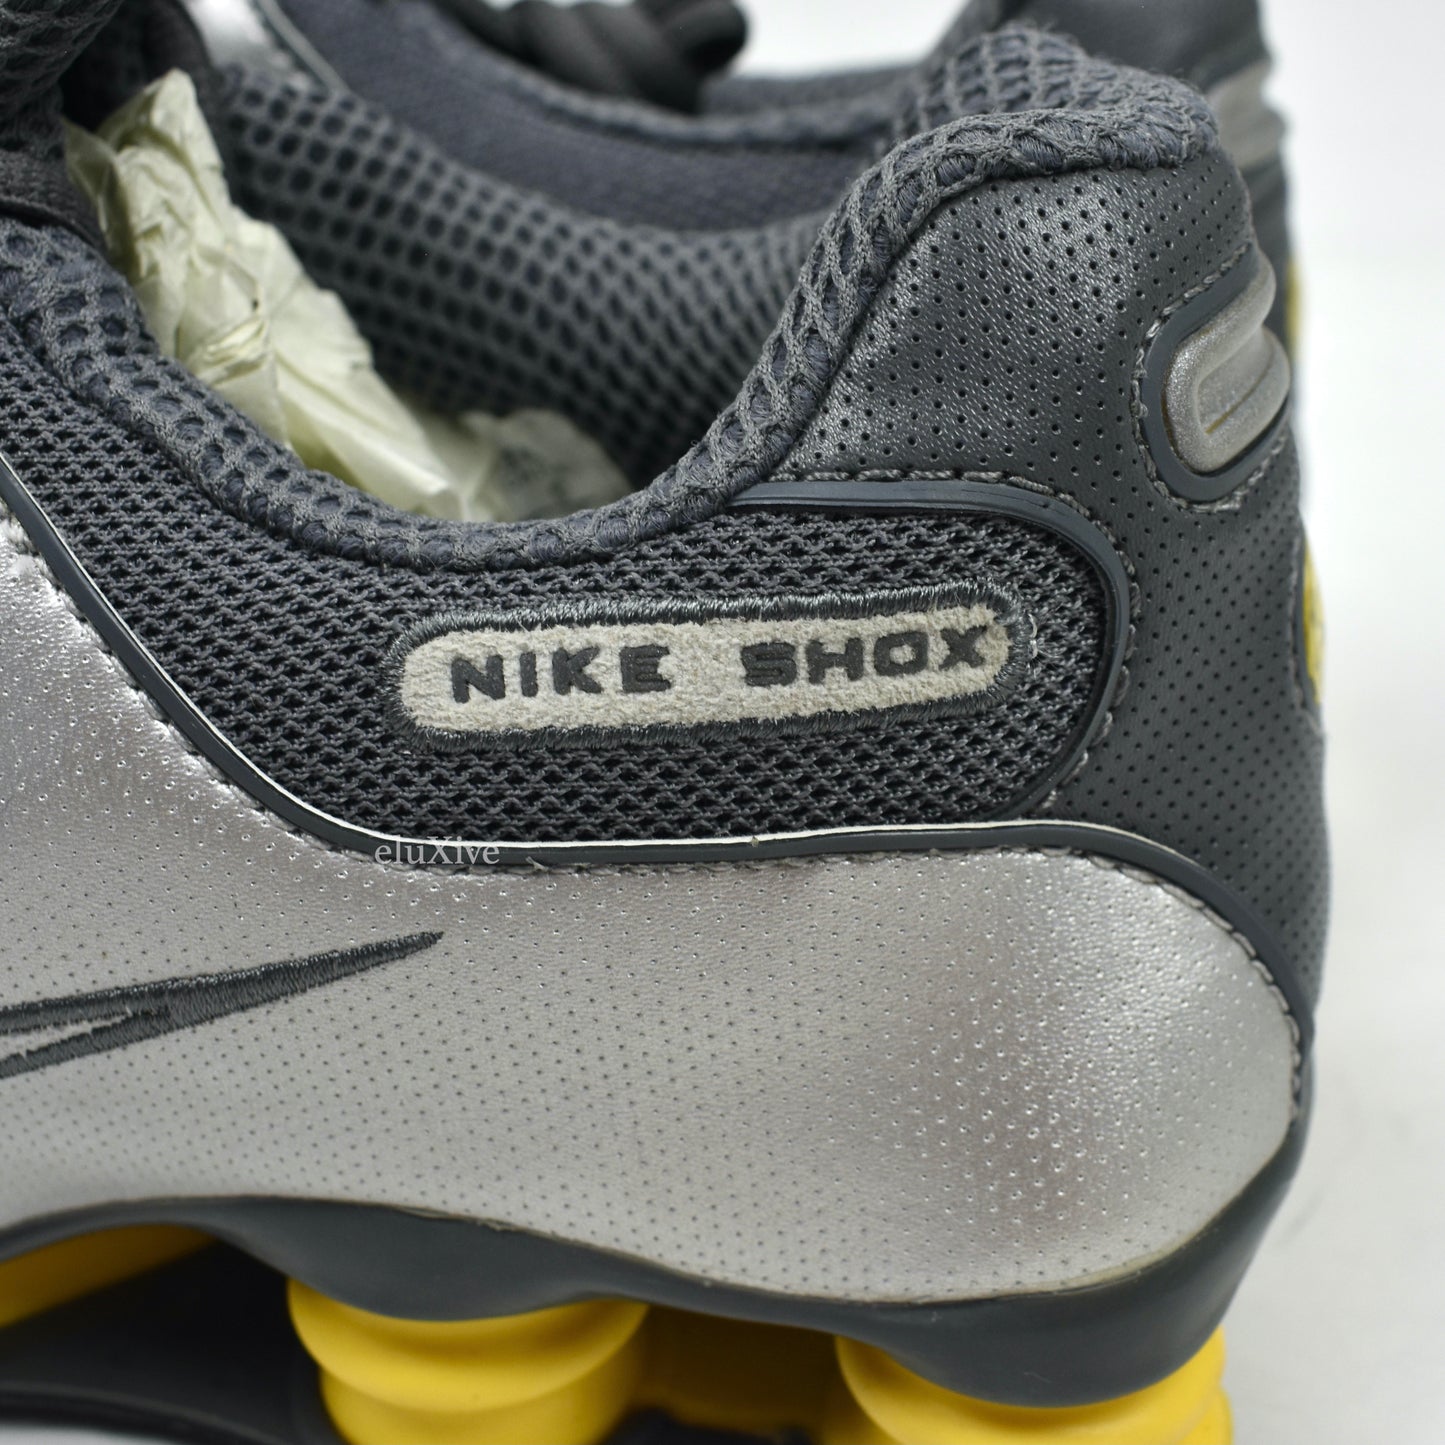 Nike - Shox NZ Graphite / Silver / Yellow Zest (2002 Sample)